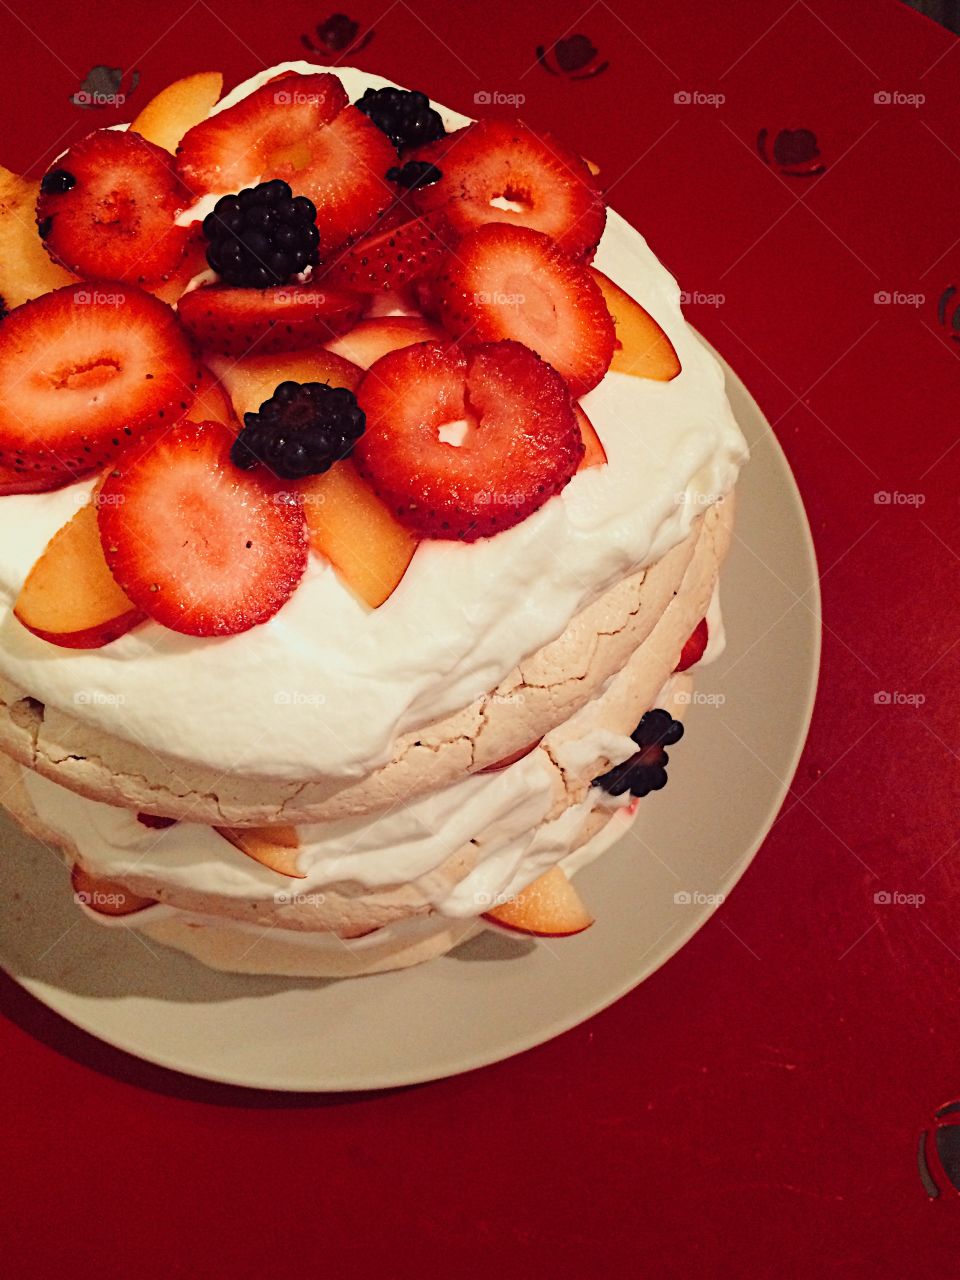 Red berry layered cake